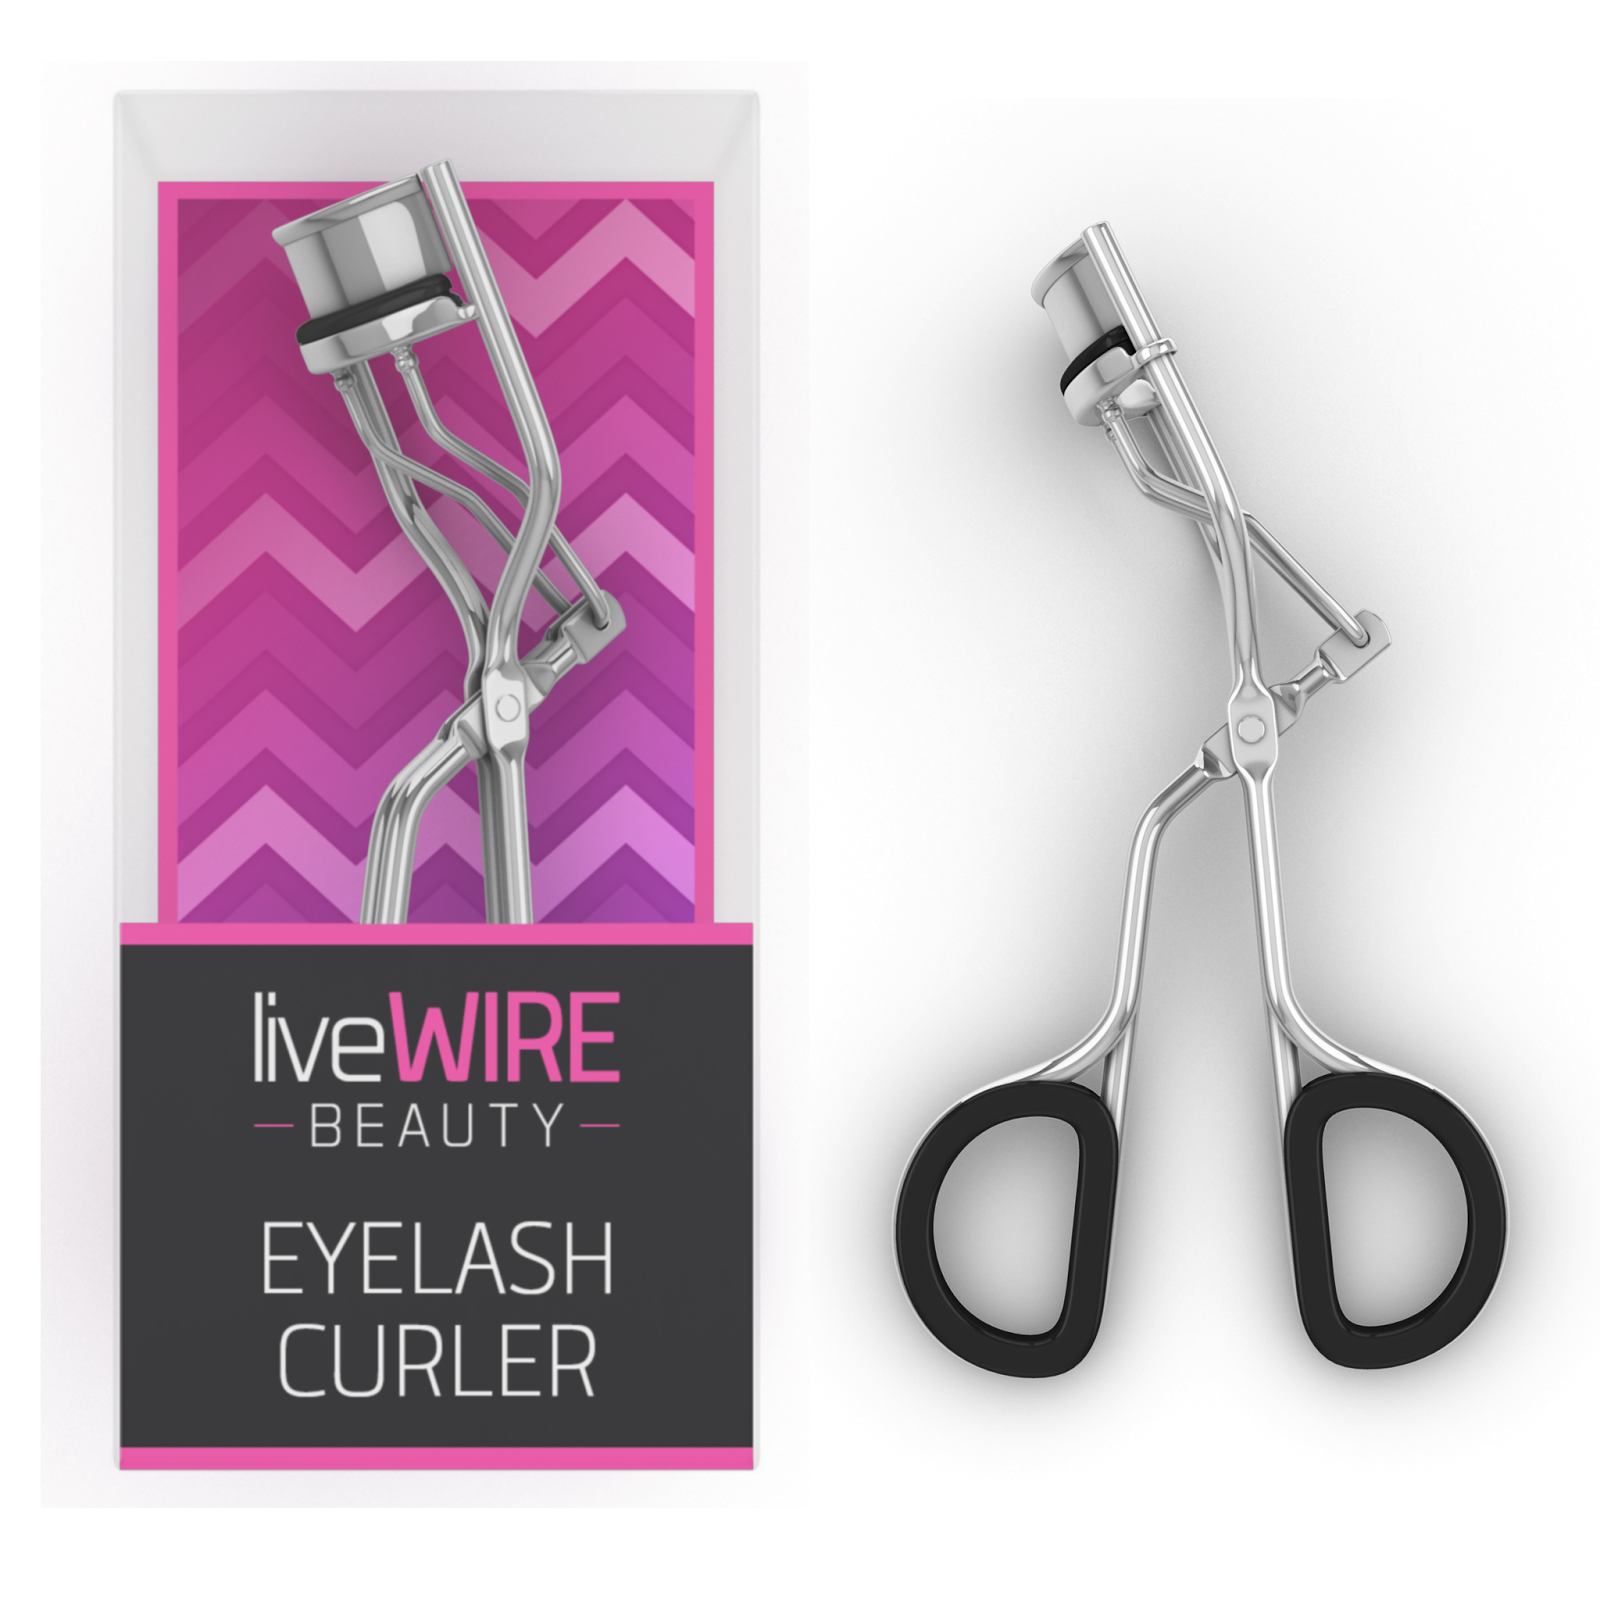 http://www.amazon.com/Professional-Eyelash-Curler-Eyelashes-Packaging/dp/B00Q0IDADA/ref=sr_1_13?ie=UTF8&qid=1424140669&sr=8-13&keywords=eyelash+curler